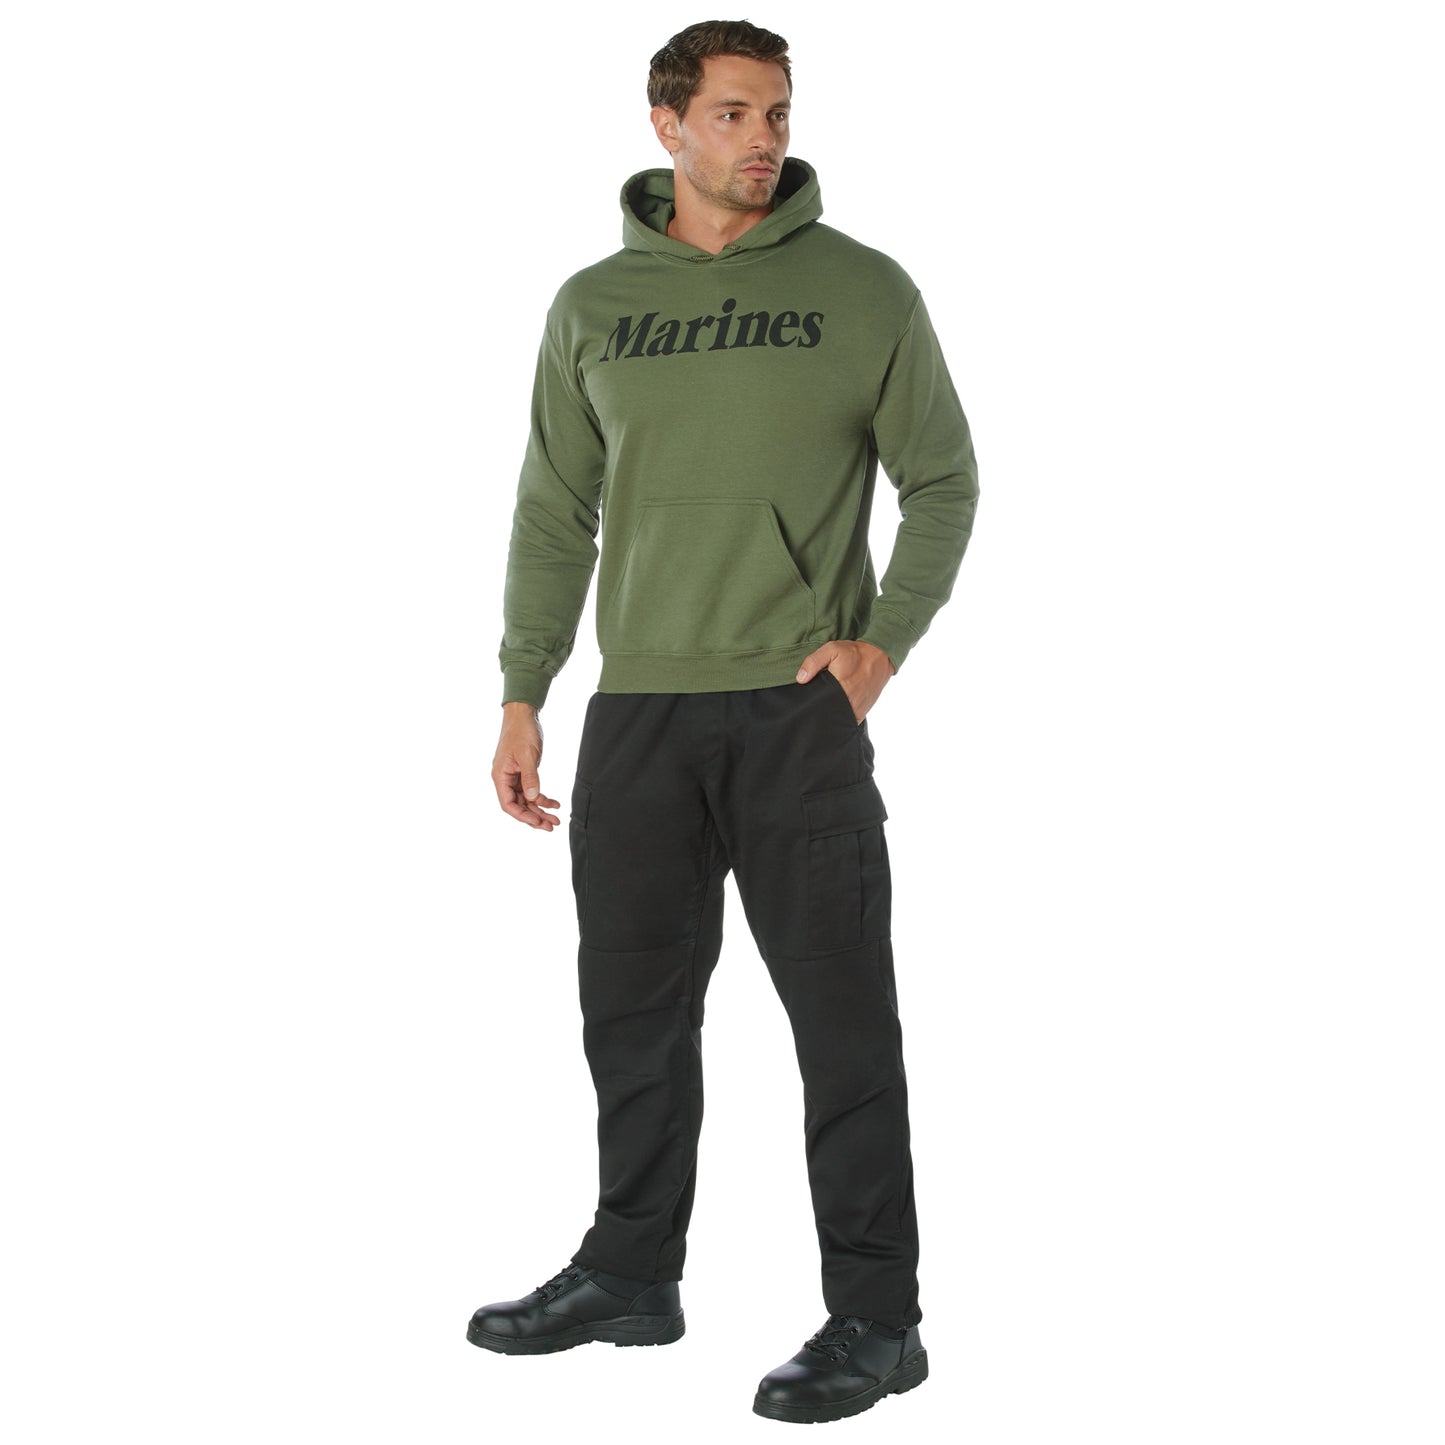 Rothco Marines Pullover Hooded Sweatshirt - Olive Drab